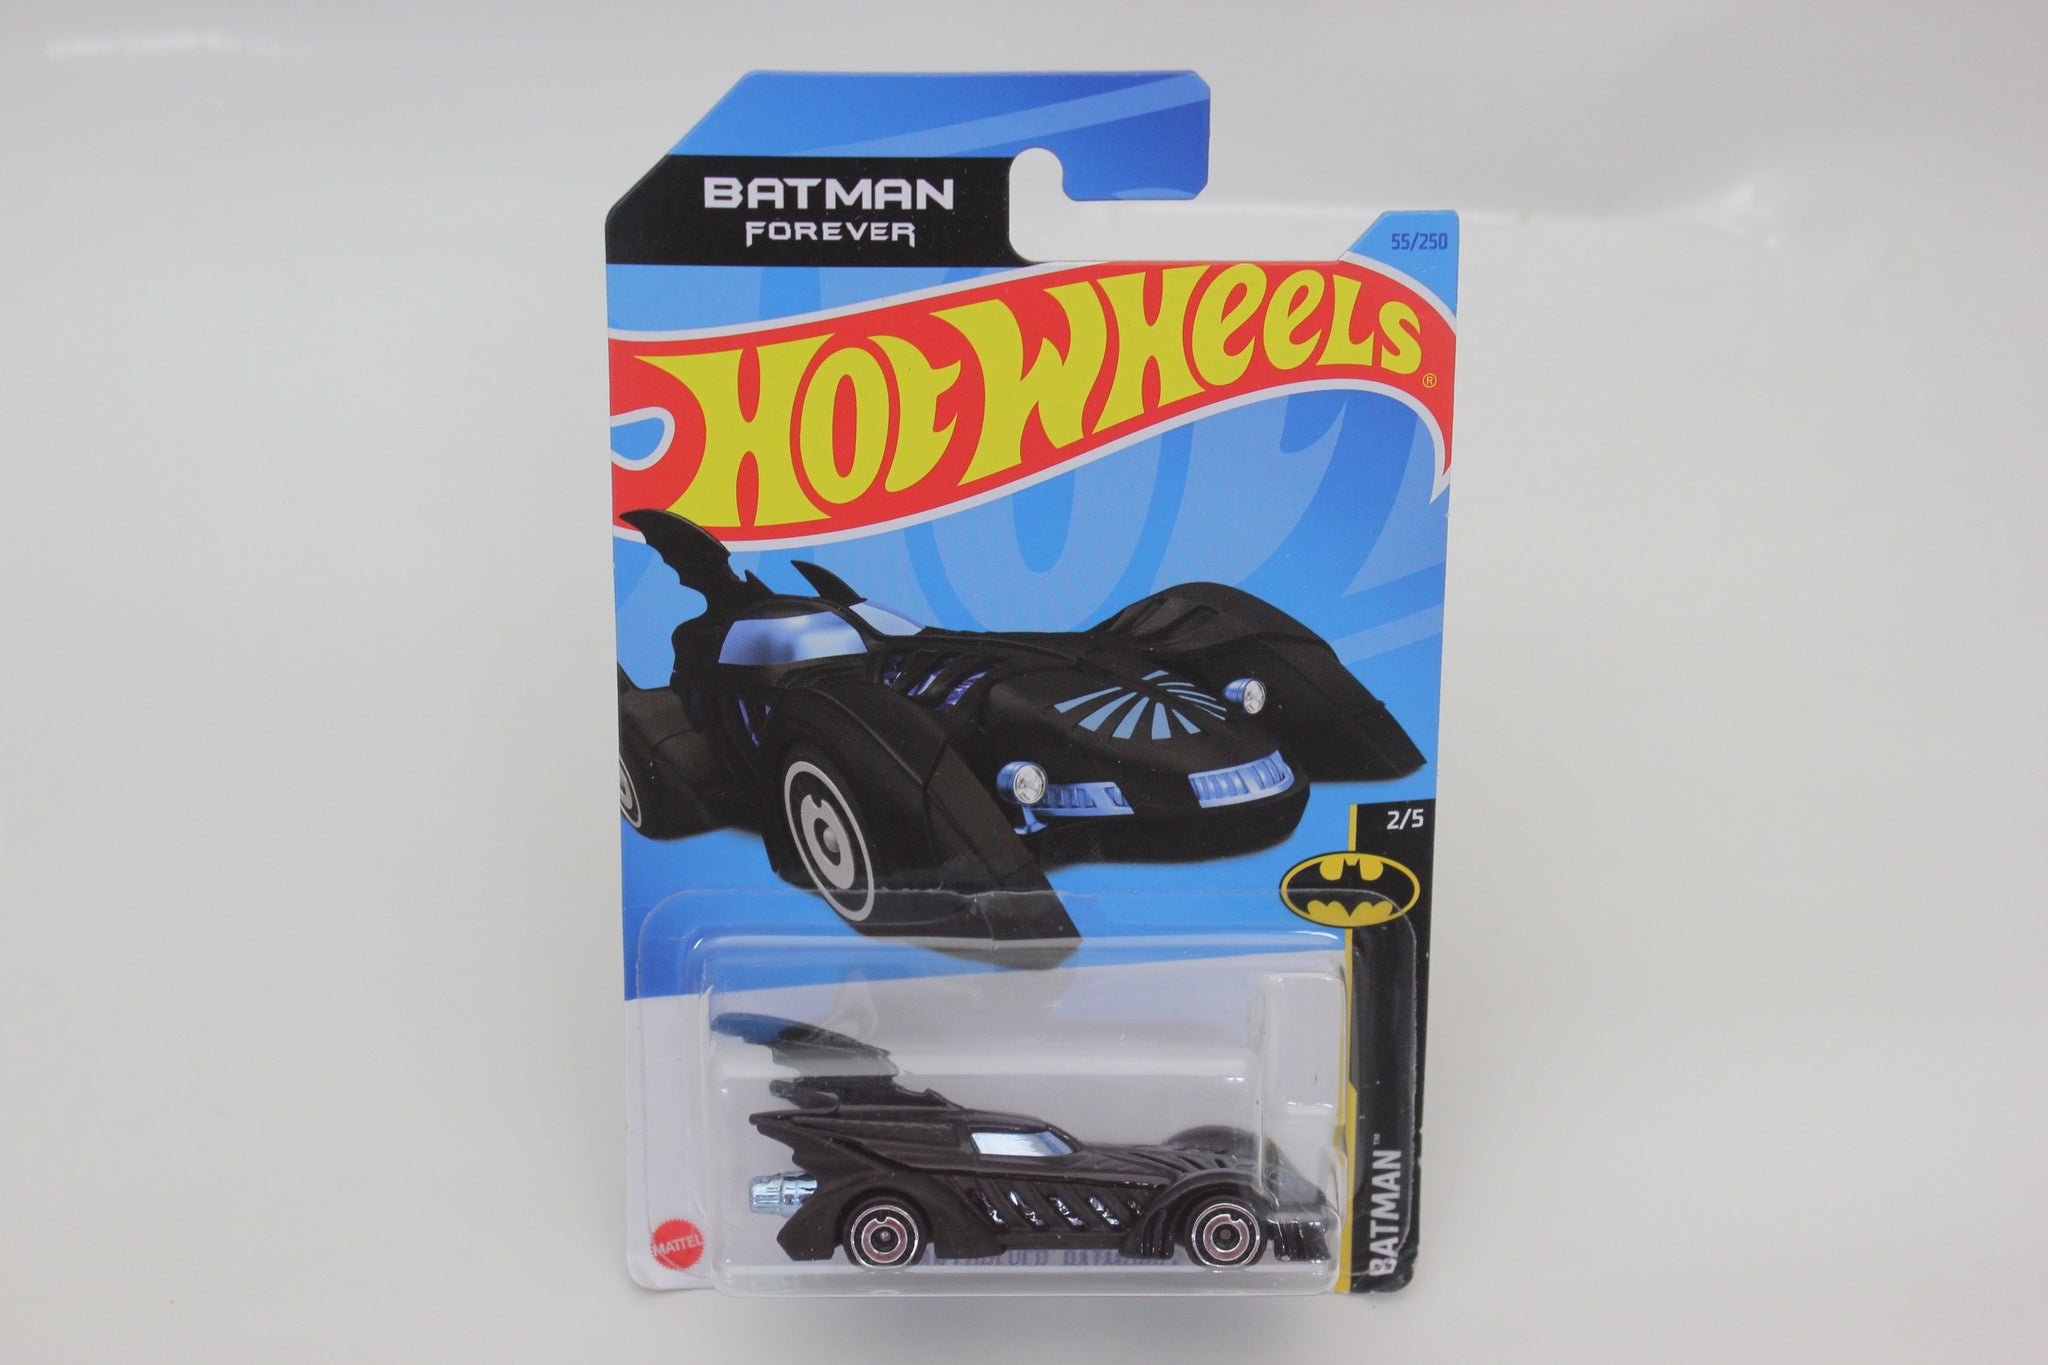 Batman Forever Batmobile Hot Wheels Figure